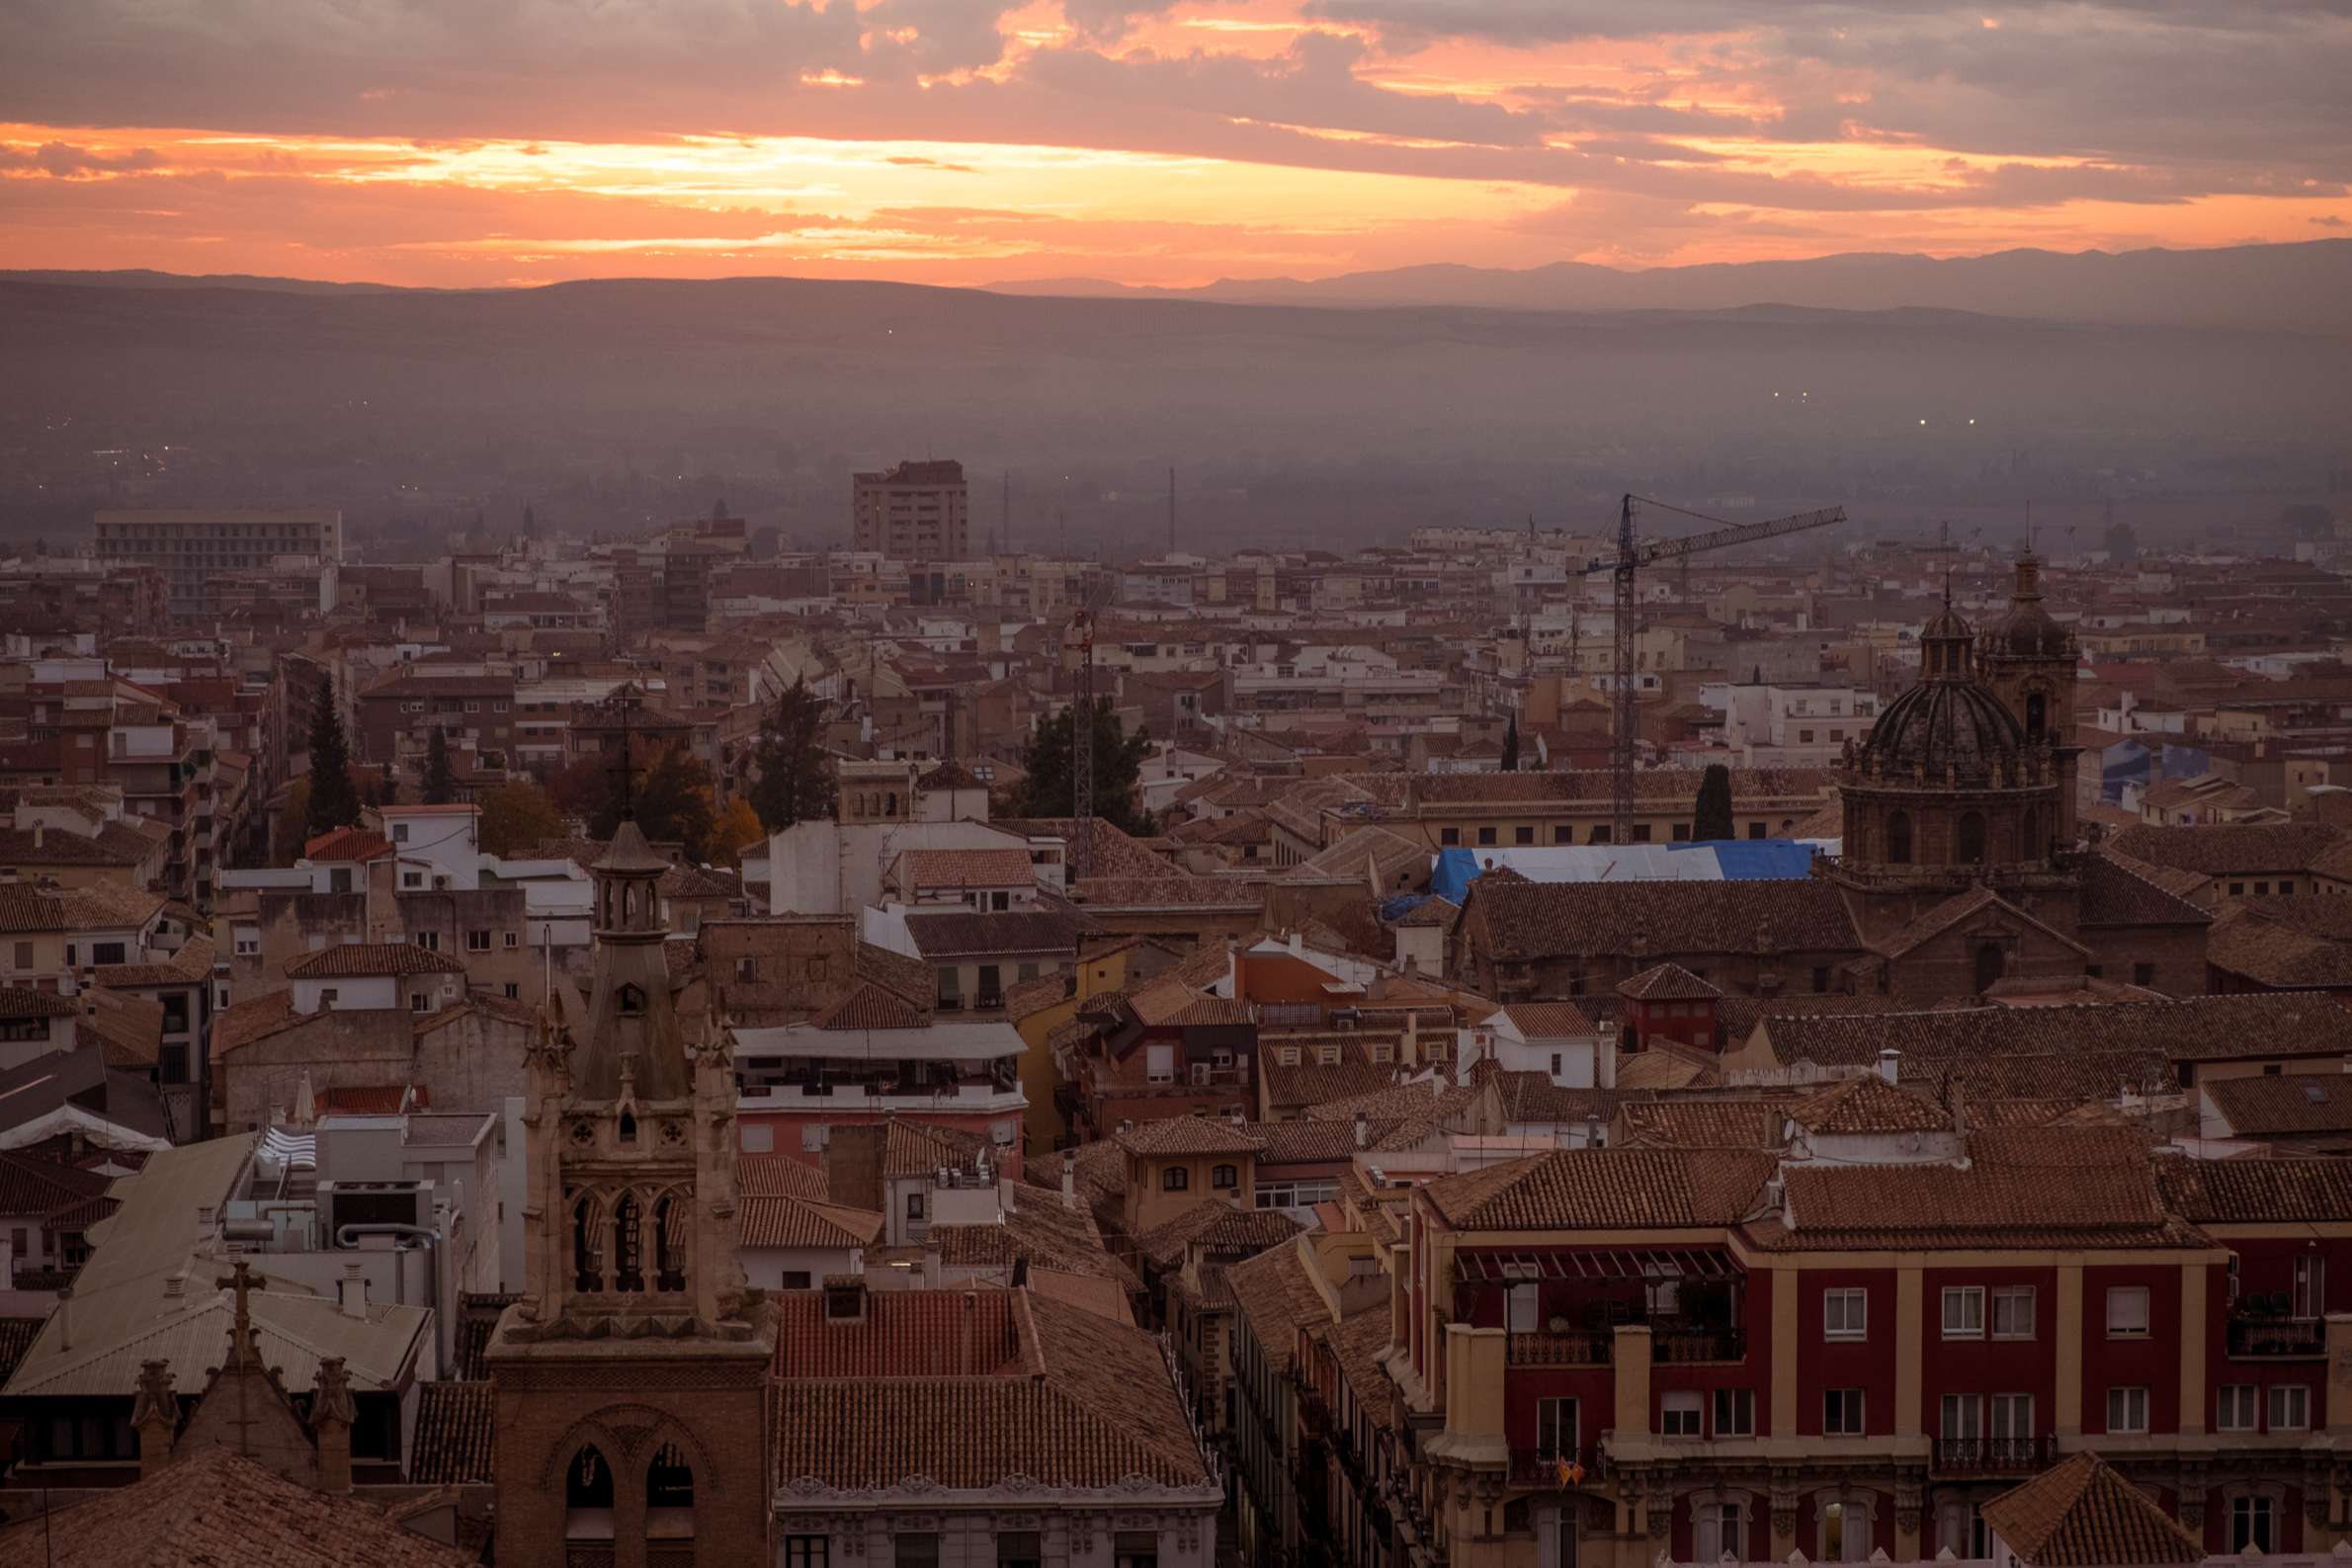 Burning sunset over Granada